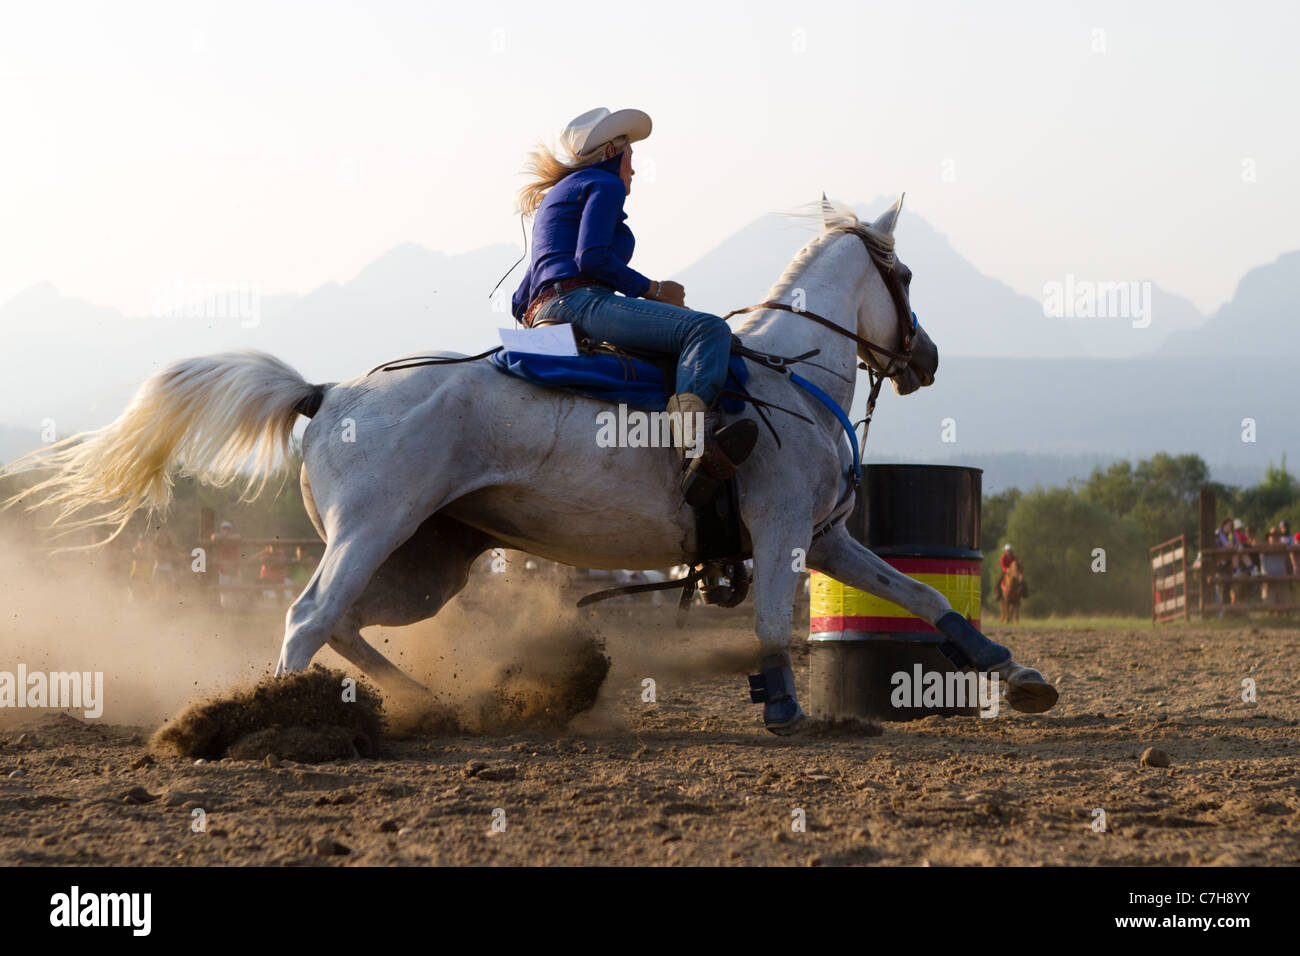 Cowgirl auf Reiten in das Ladies Barrel Racing Event, Stockfoto